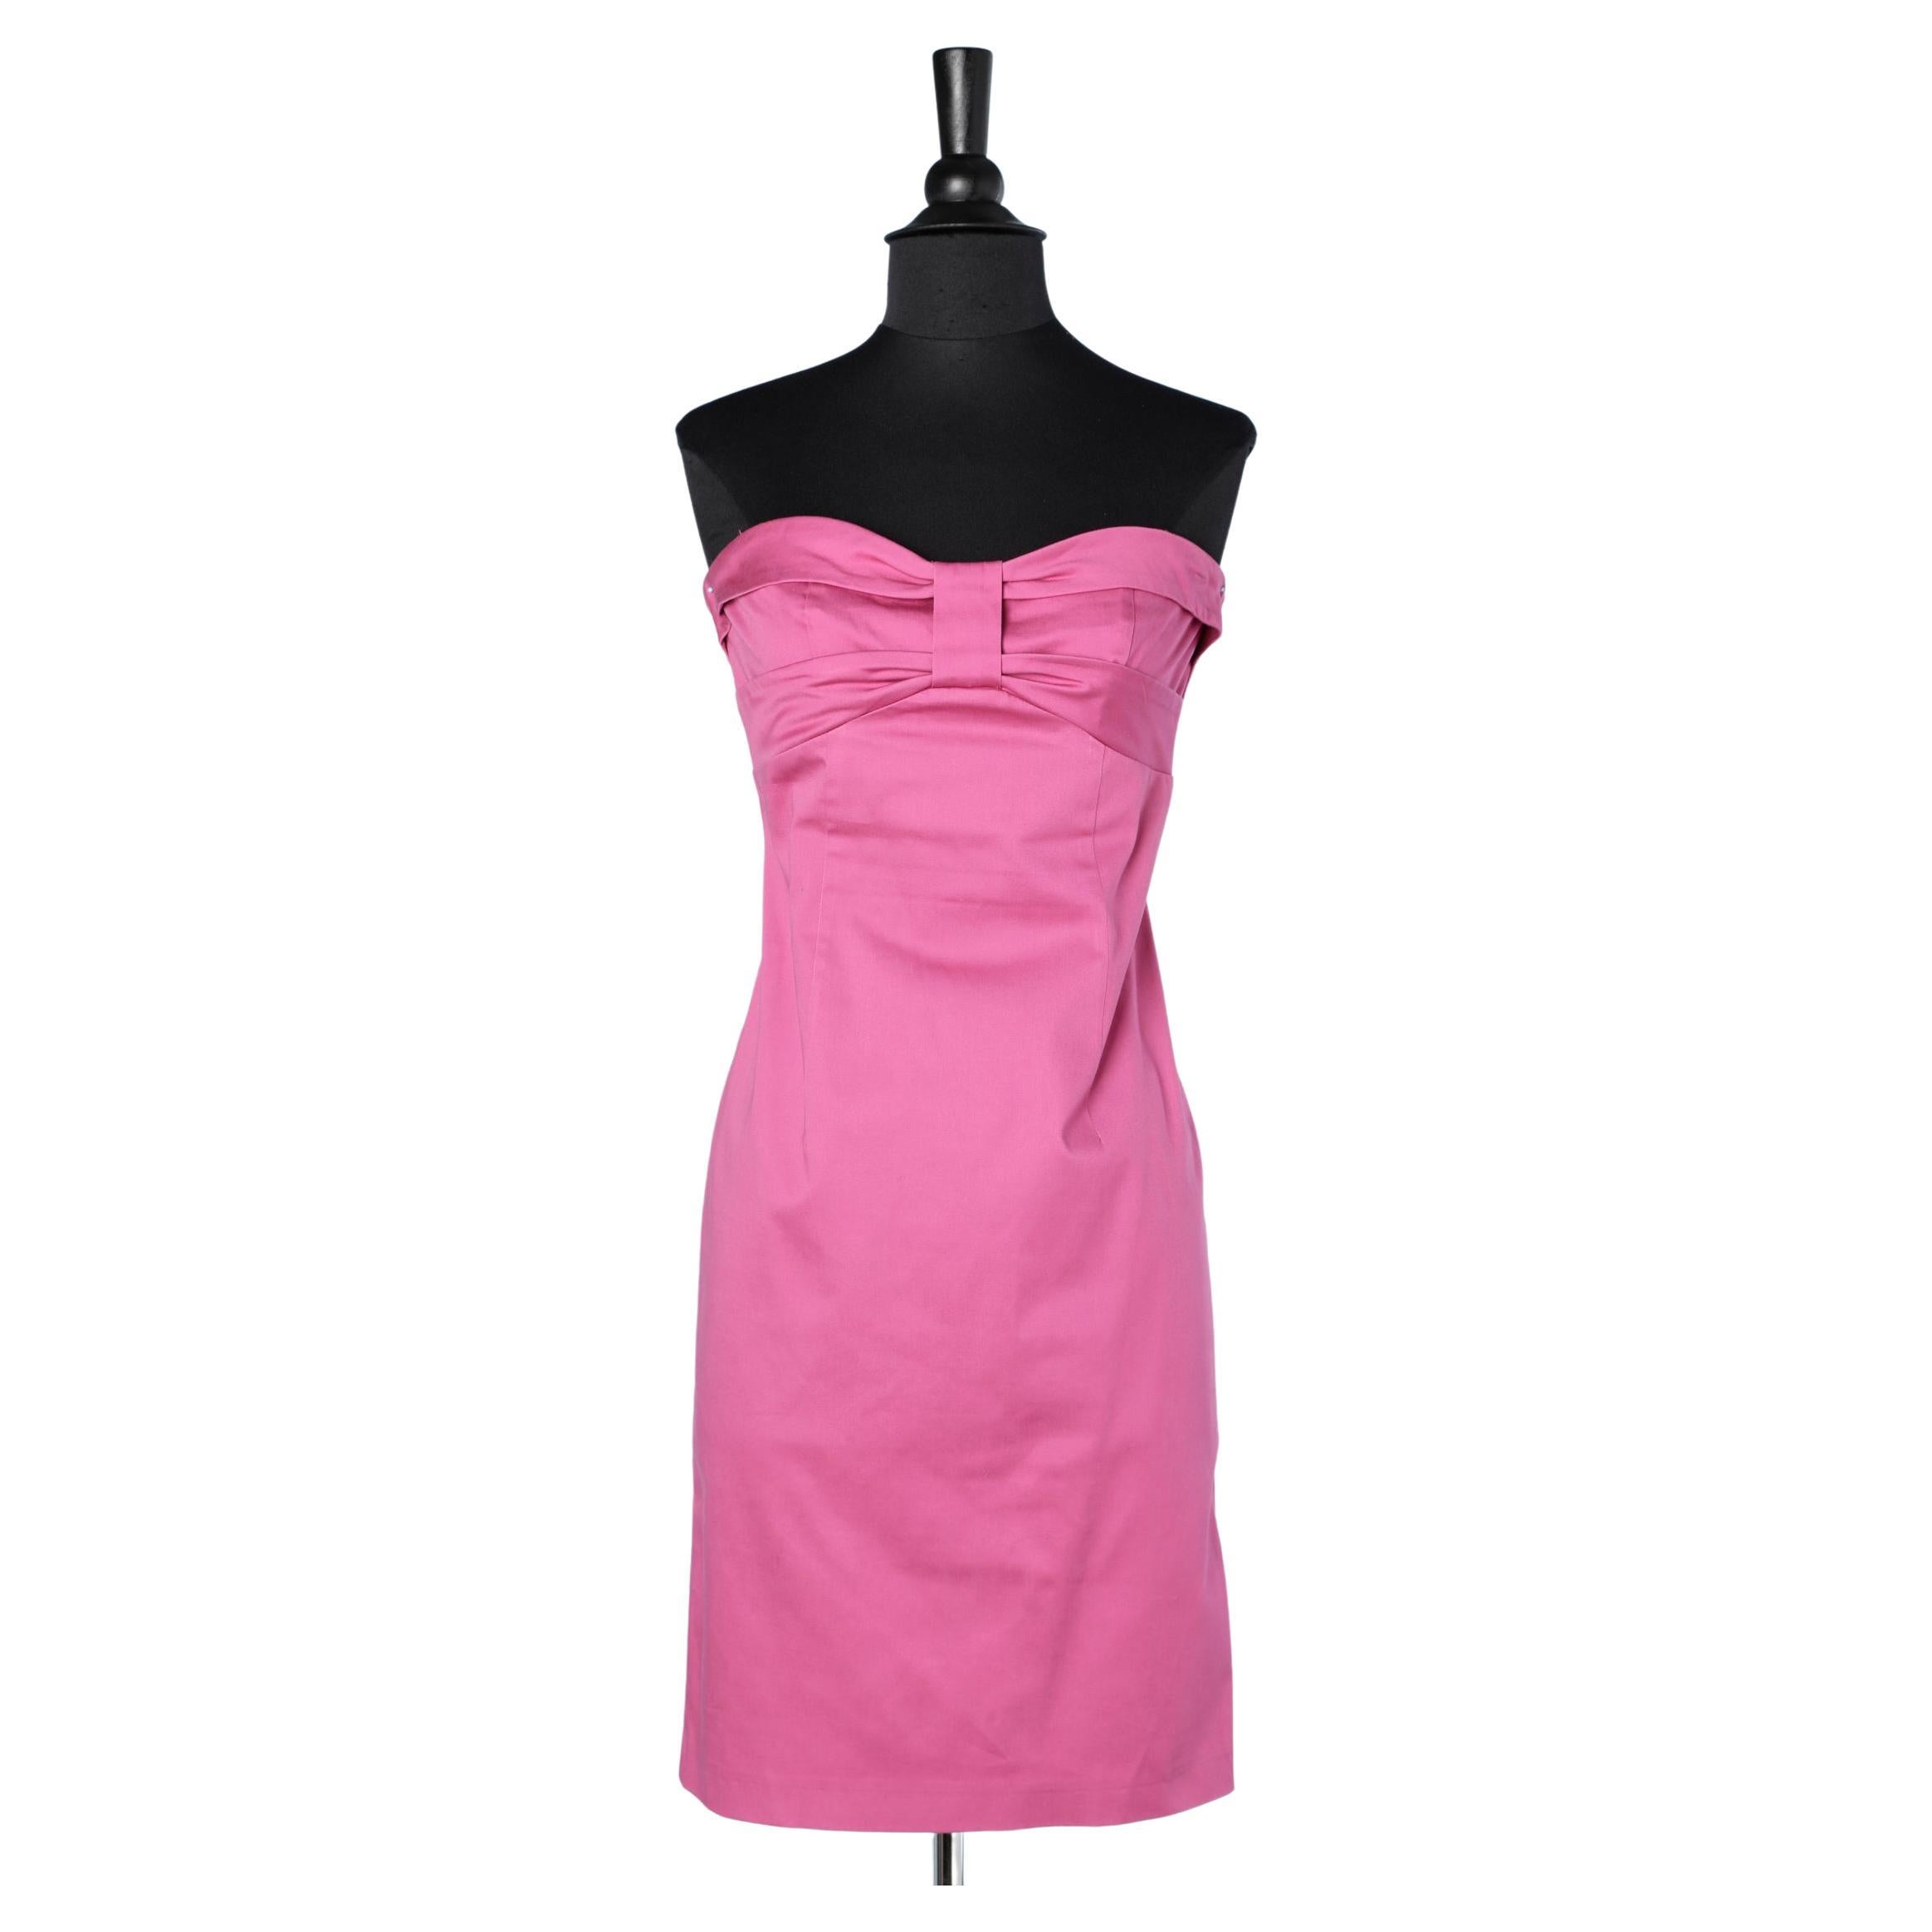 Pink bustier cotton dress Sportstaff 